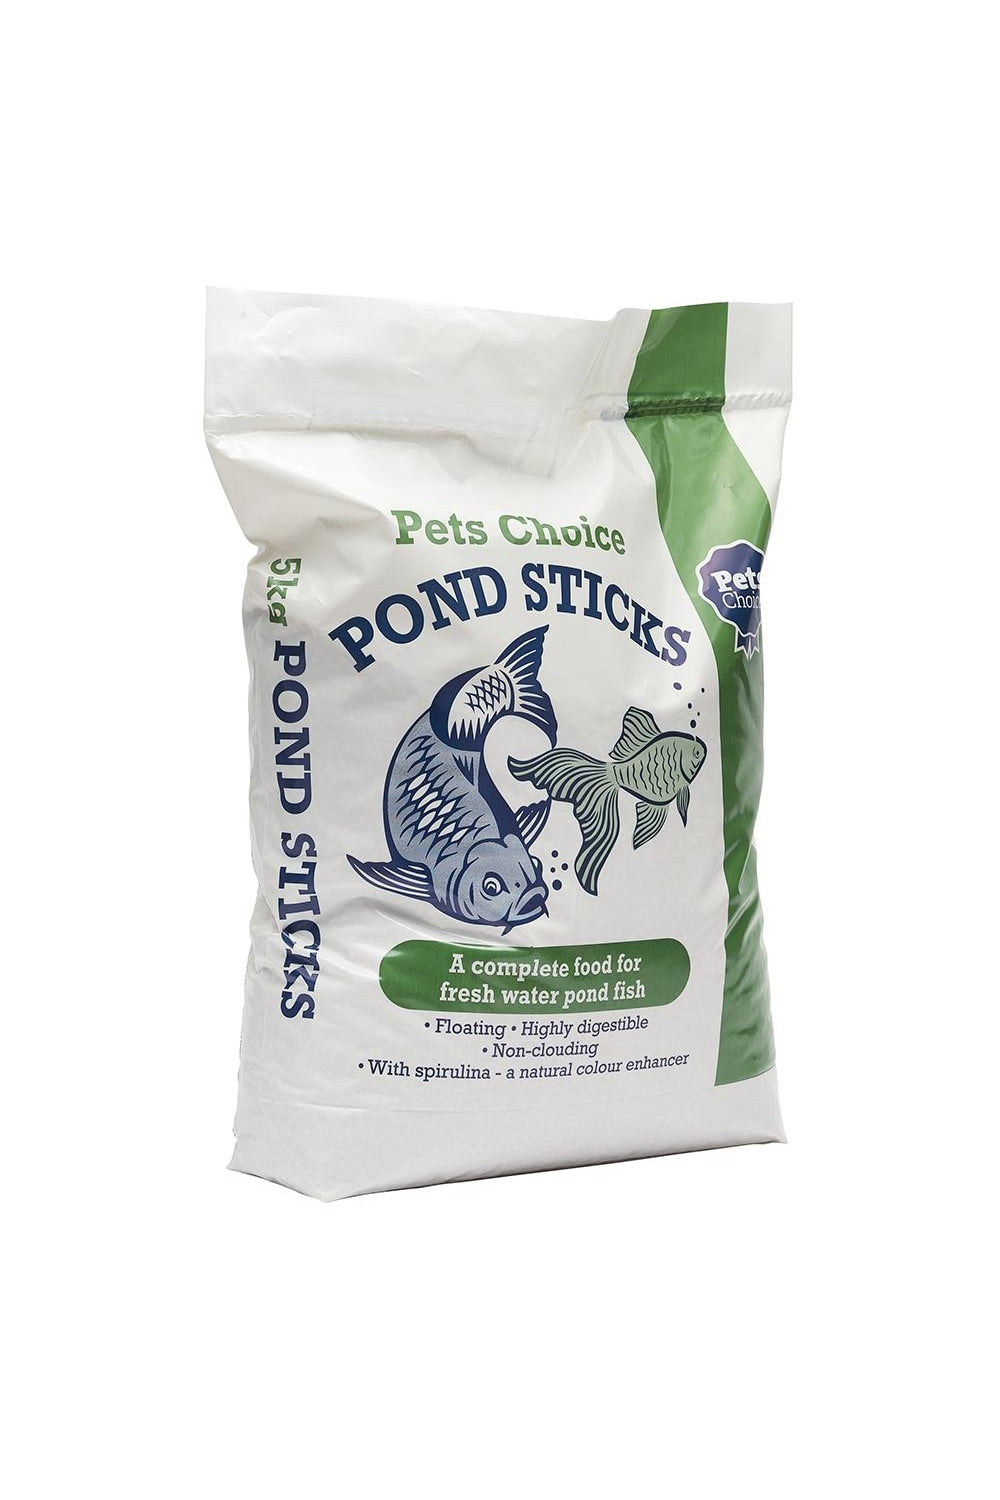 Pets Choice Pond Sticks (May Vary) (11lbs)